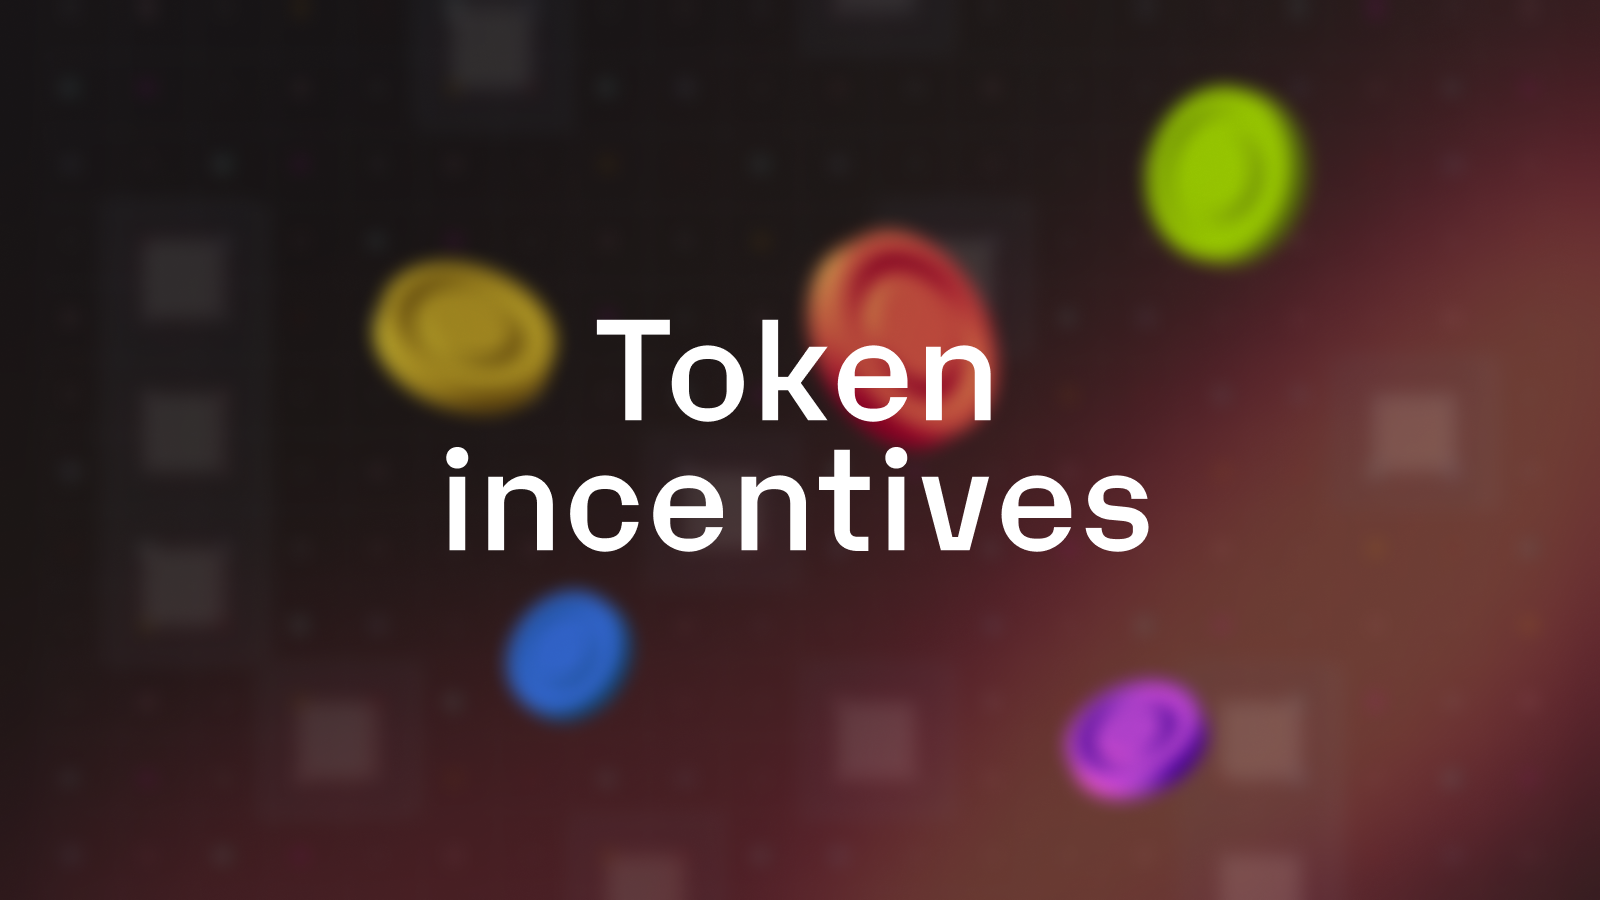 Token incentives